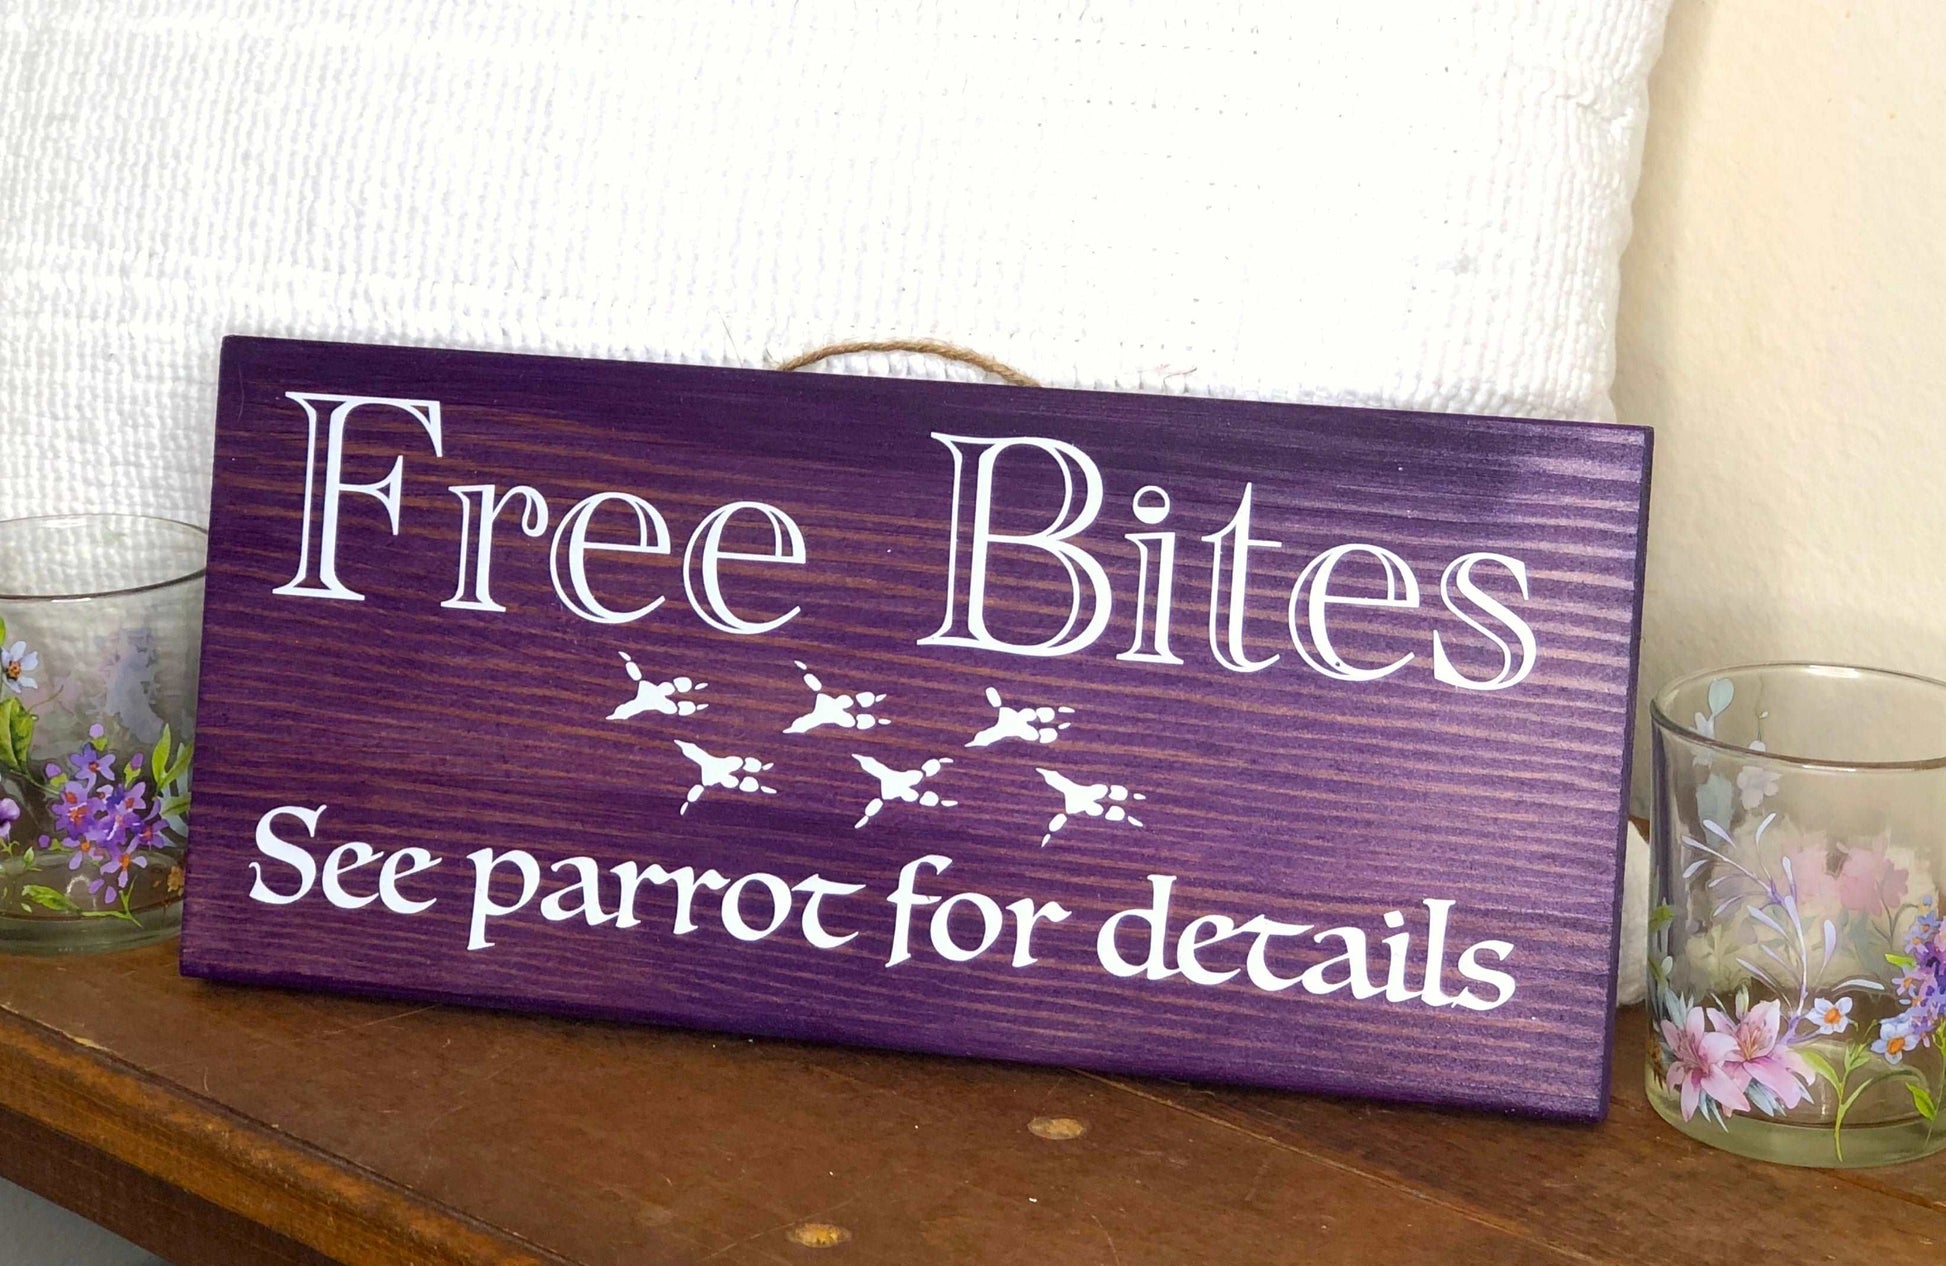 free bites, see parrot for details wood sign